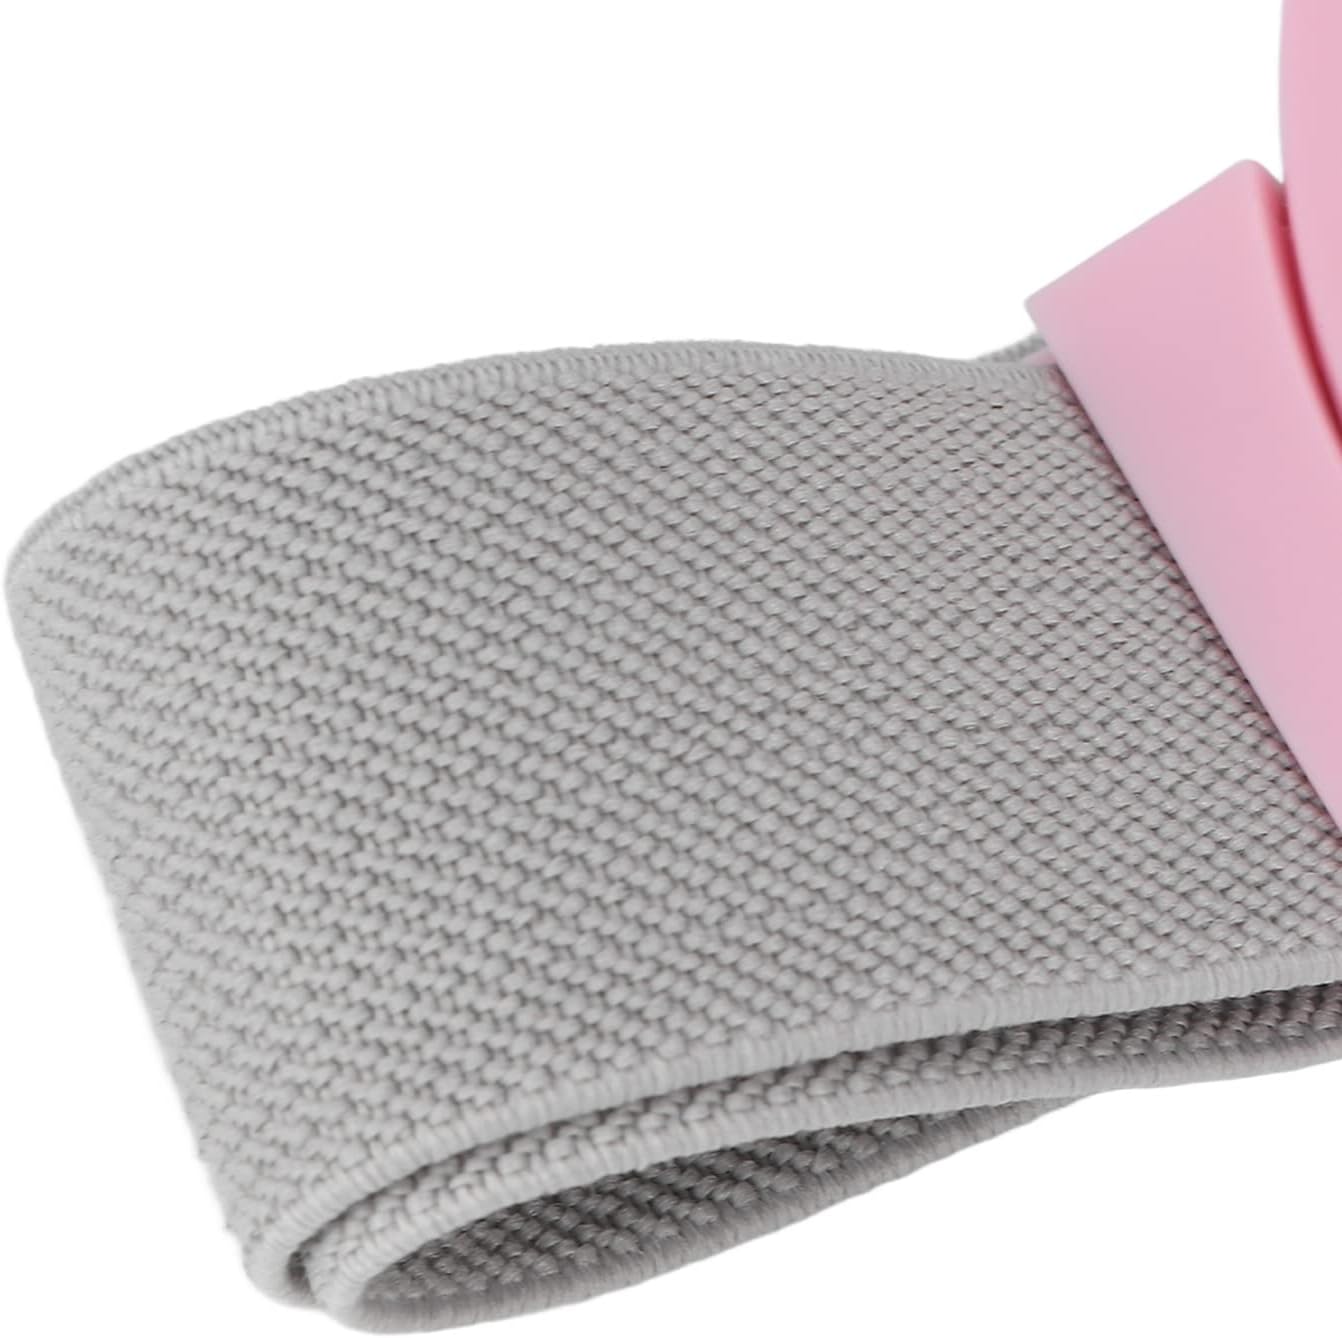 Menstrual pain belt AFS-961 pink